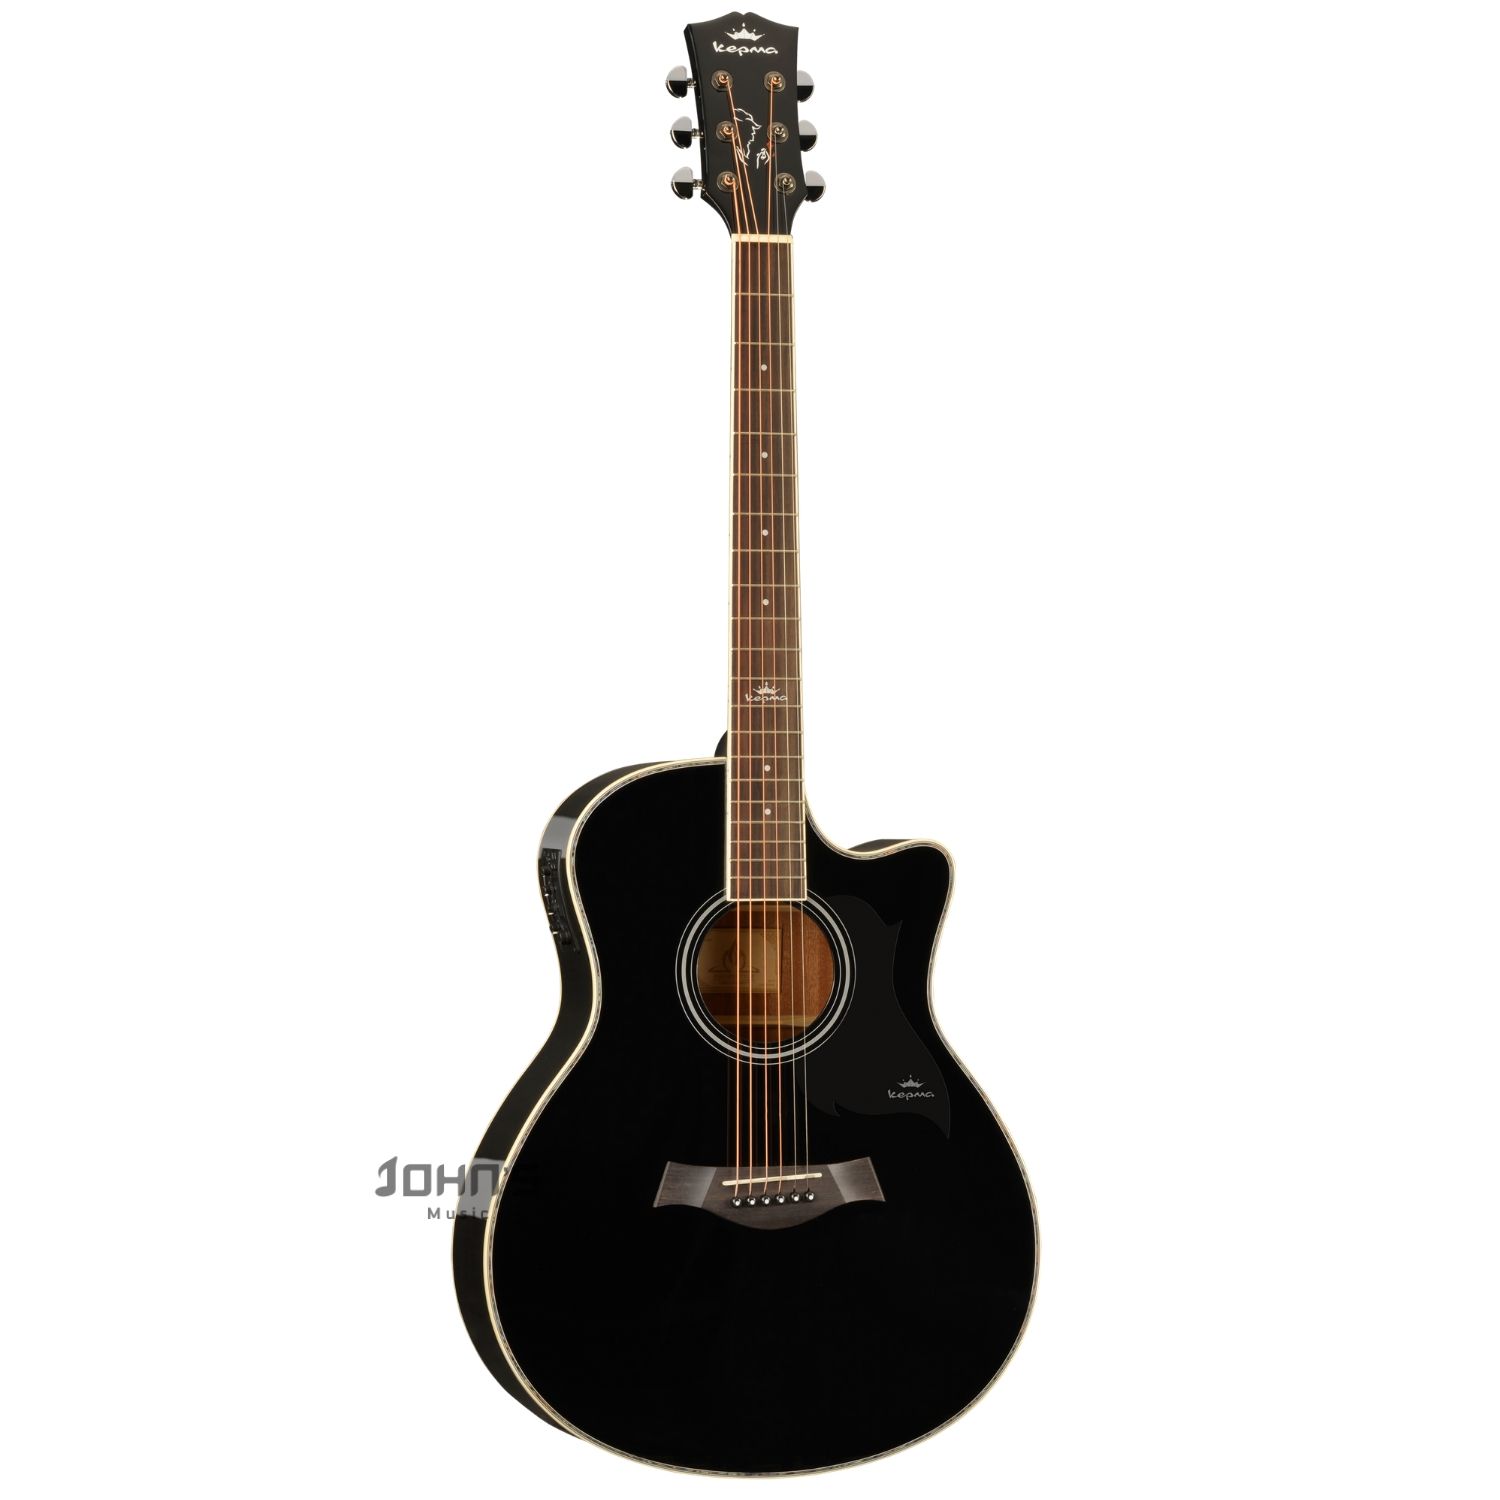 Kepma A1c Acoustic Guitar Black for beginners